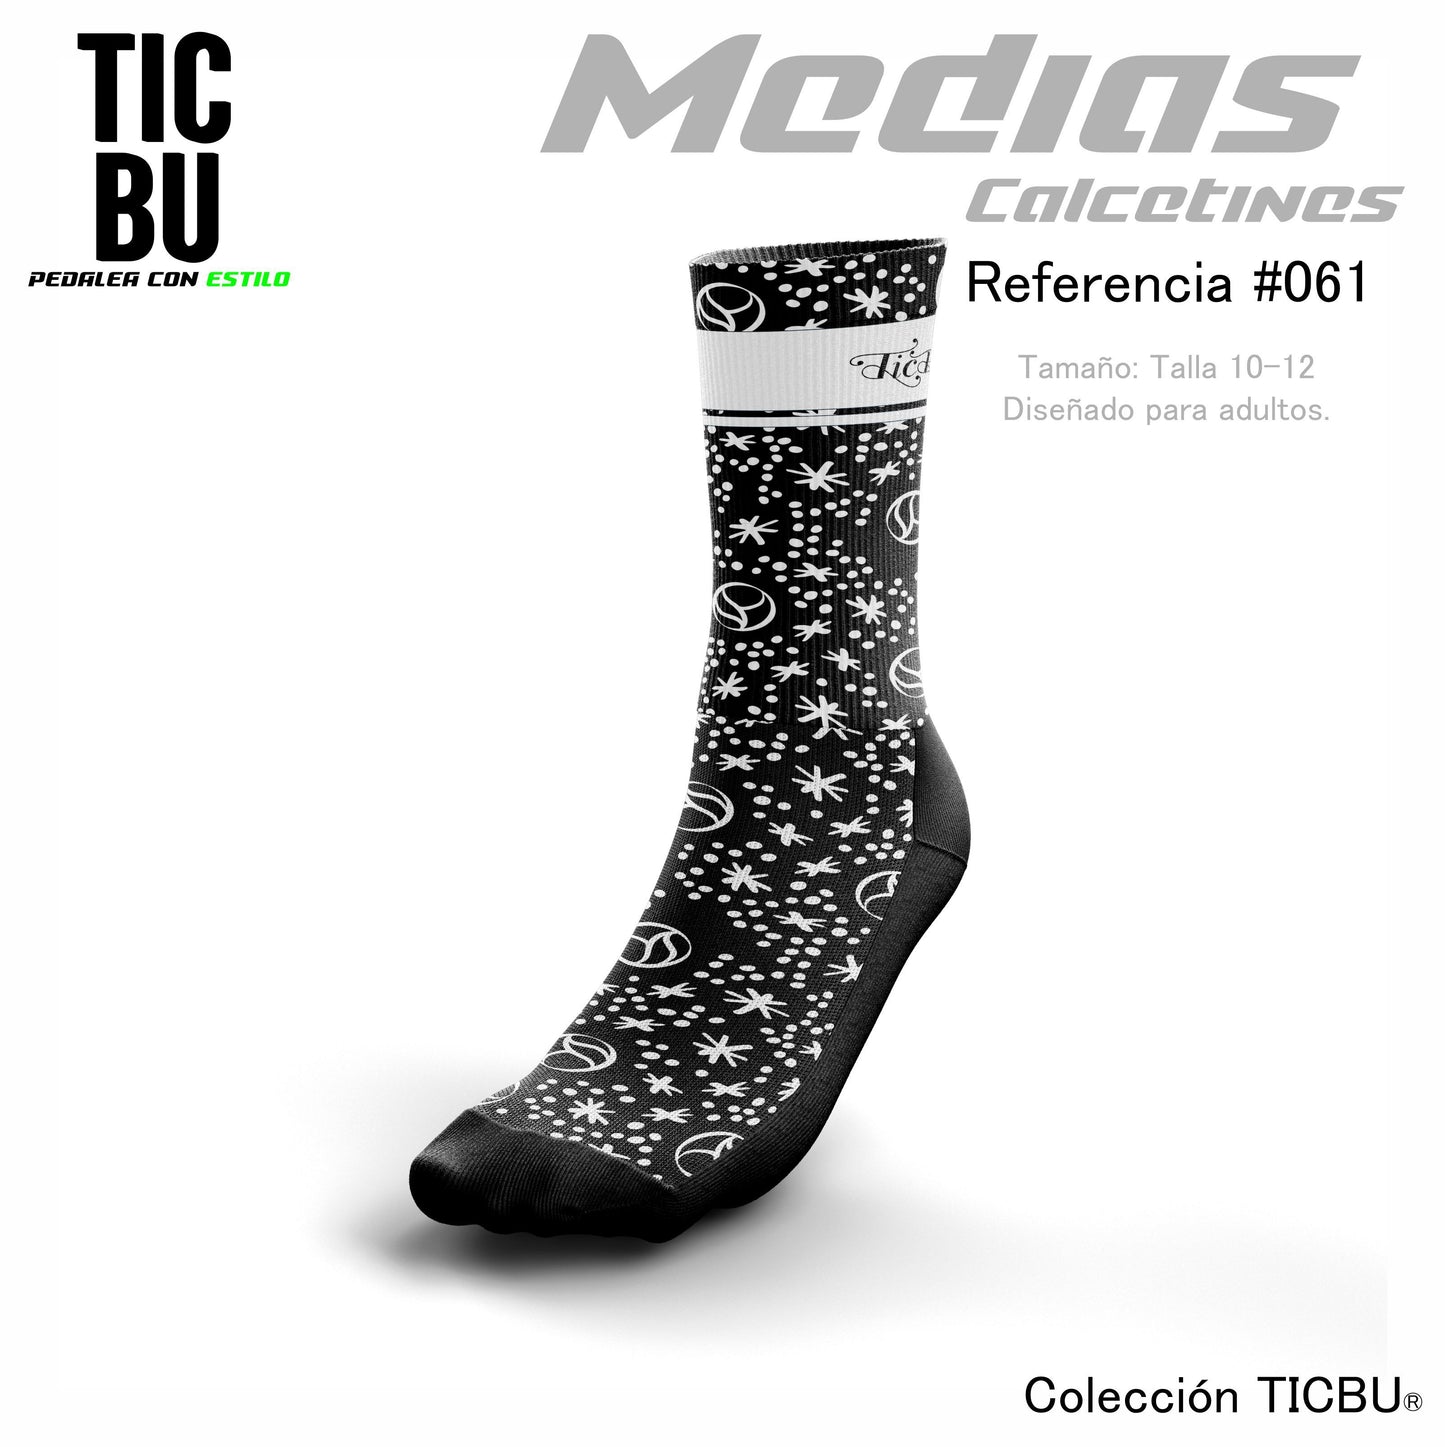 TICBU socks Ref 061